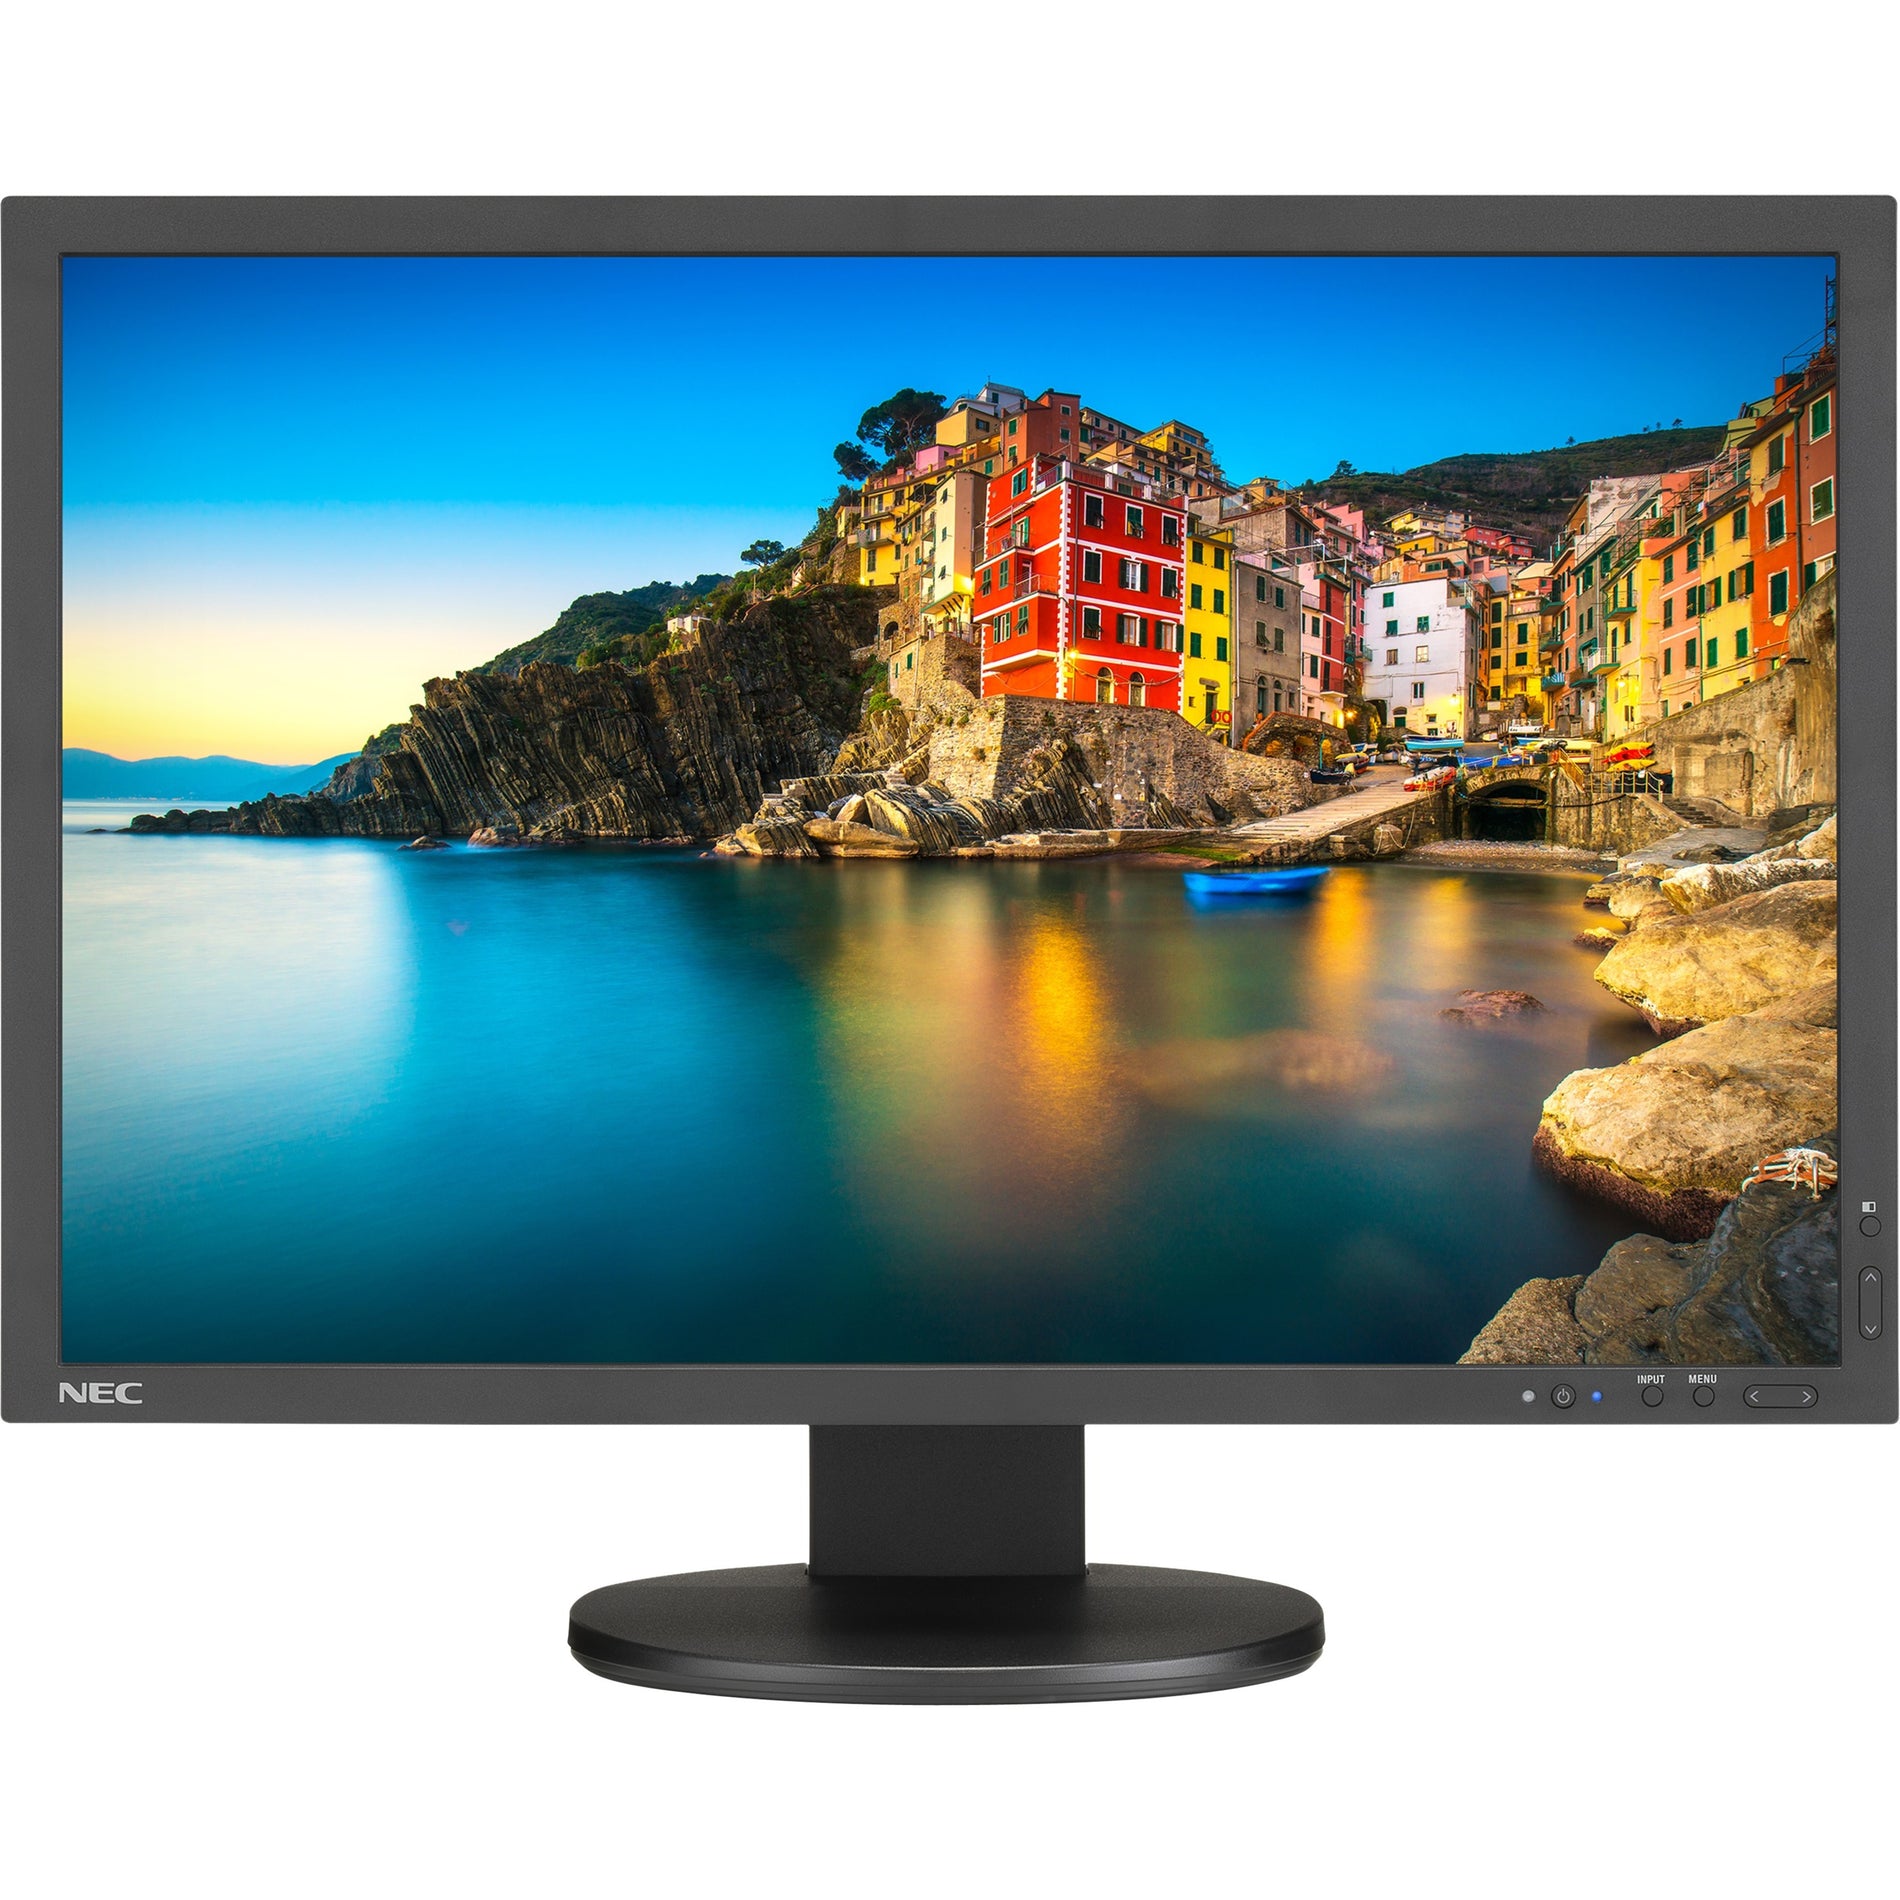 NEC Display P243W-BK Professional 24.1" WUXGA LCD Monitor, 16:10, 350 Nit Brightness, 1.07 Billion Colors